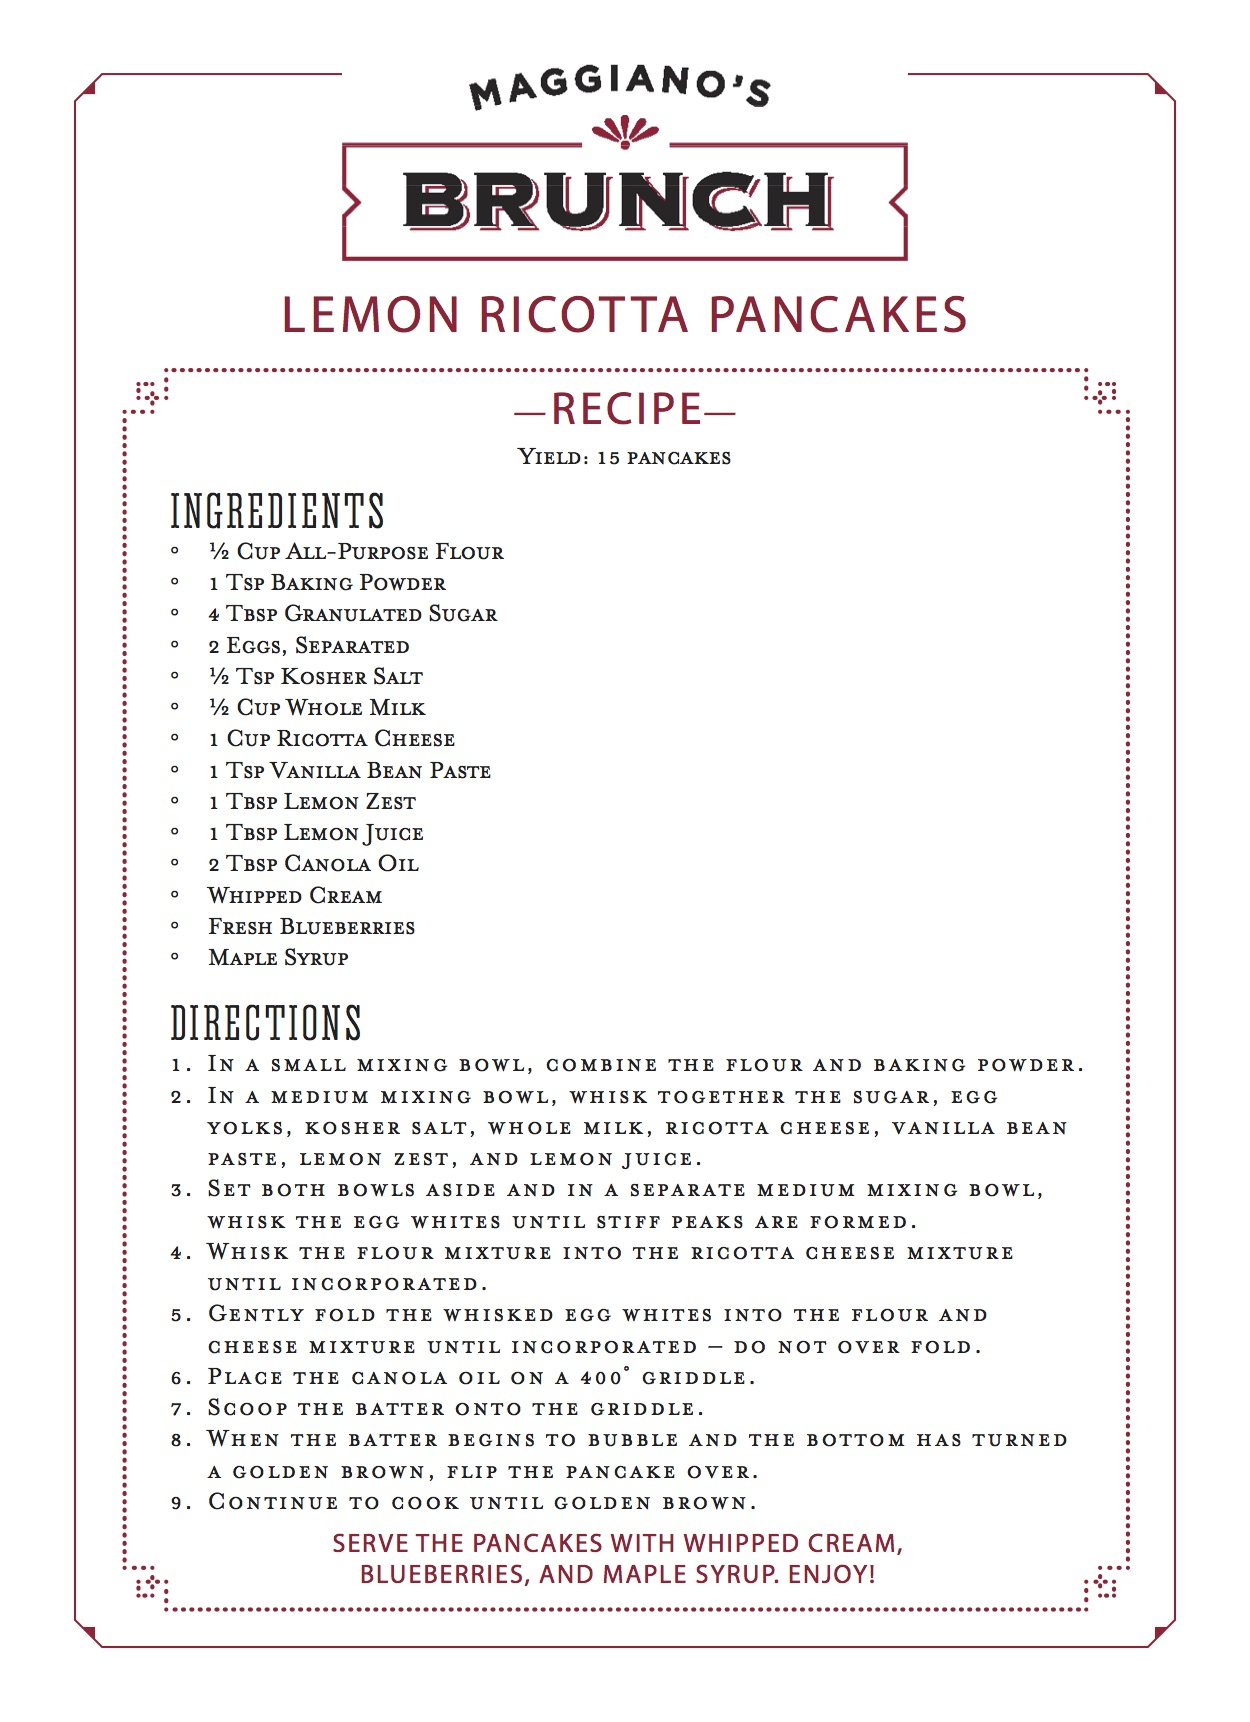 Maggiano's Brunch Menu, Maggiano's Lemon Ricotta Pancakes Recipe 